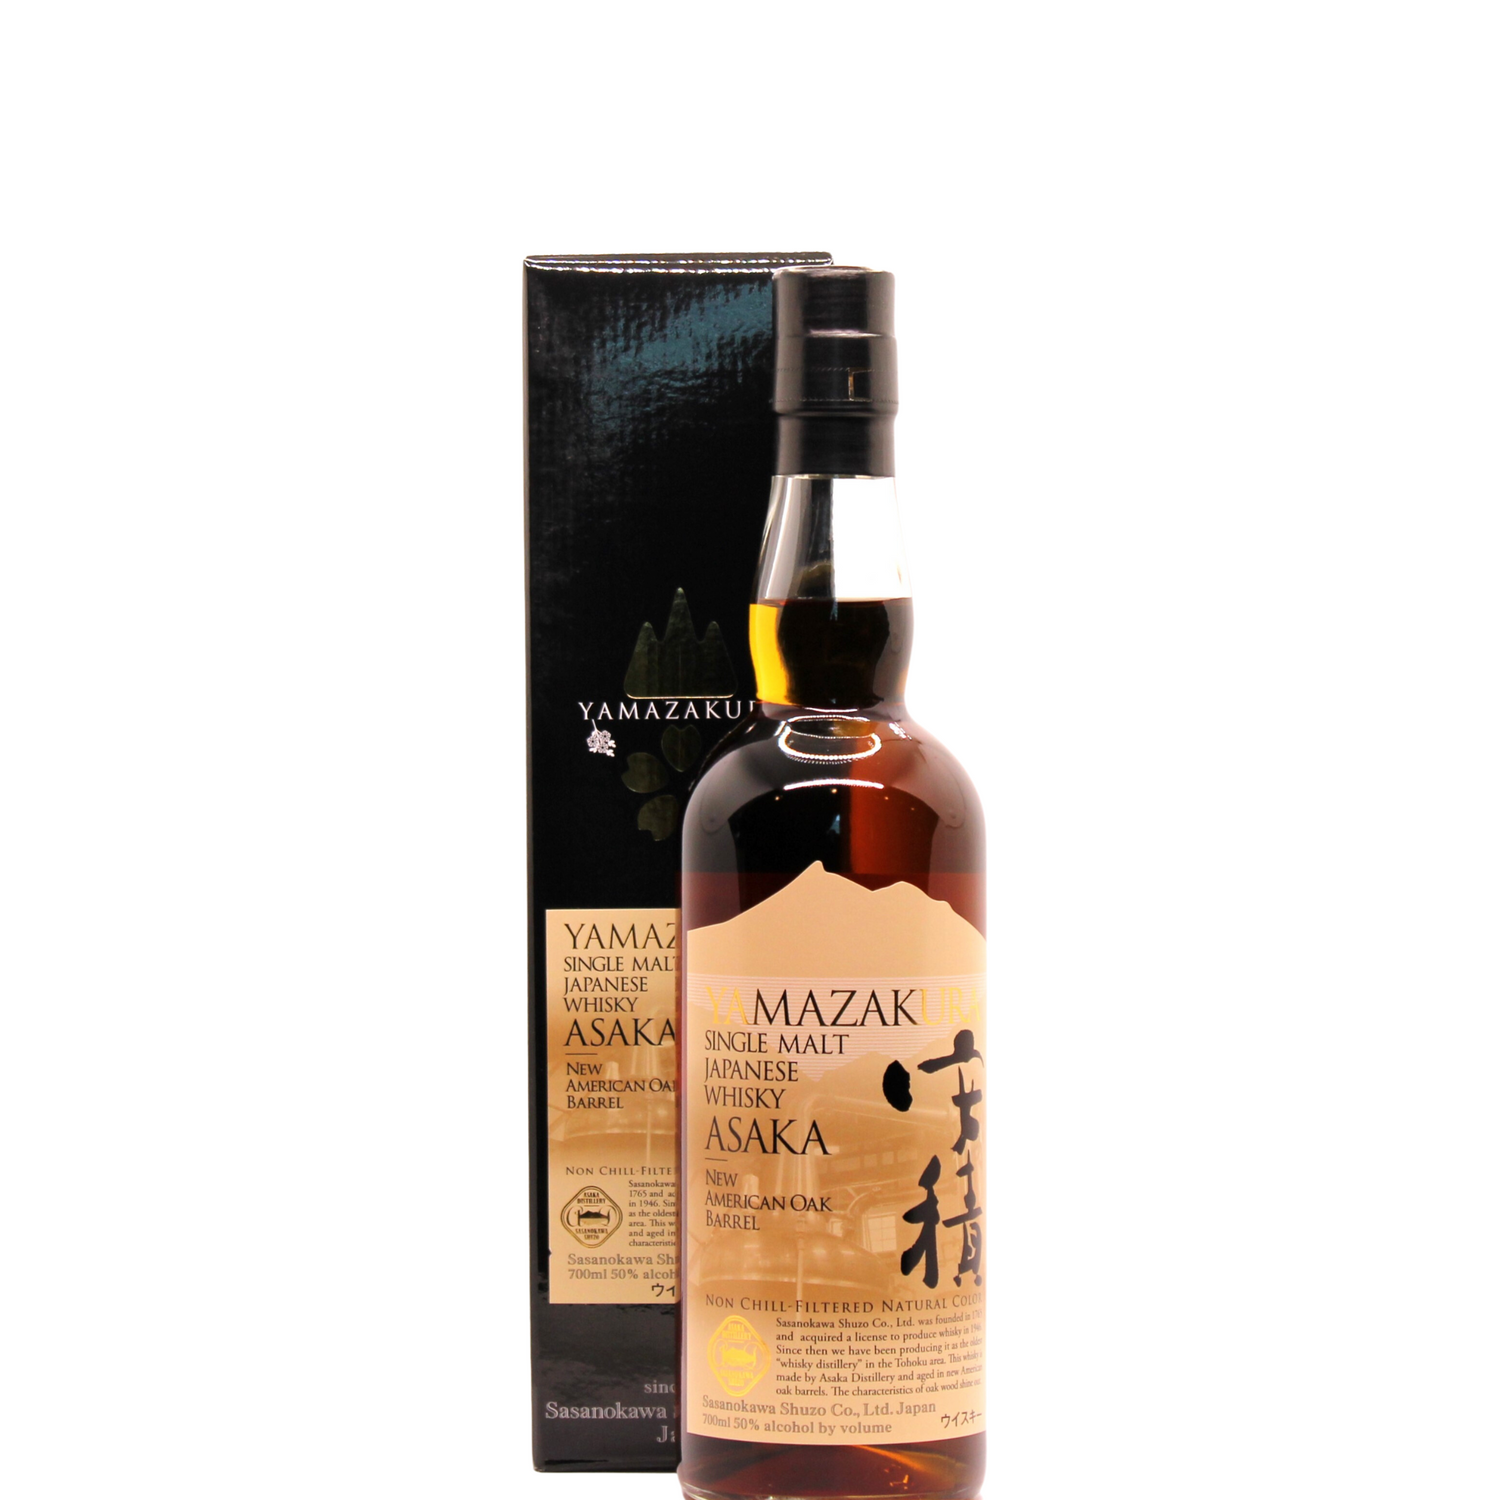 YAMAZAKURA Single Malt Japanese Whisky ASAKA Distllery New American Oak Barrel